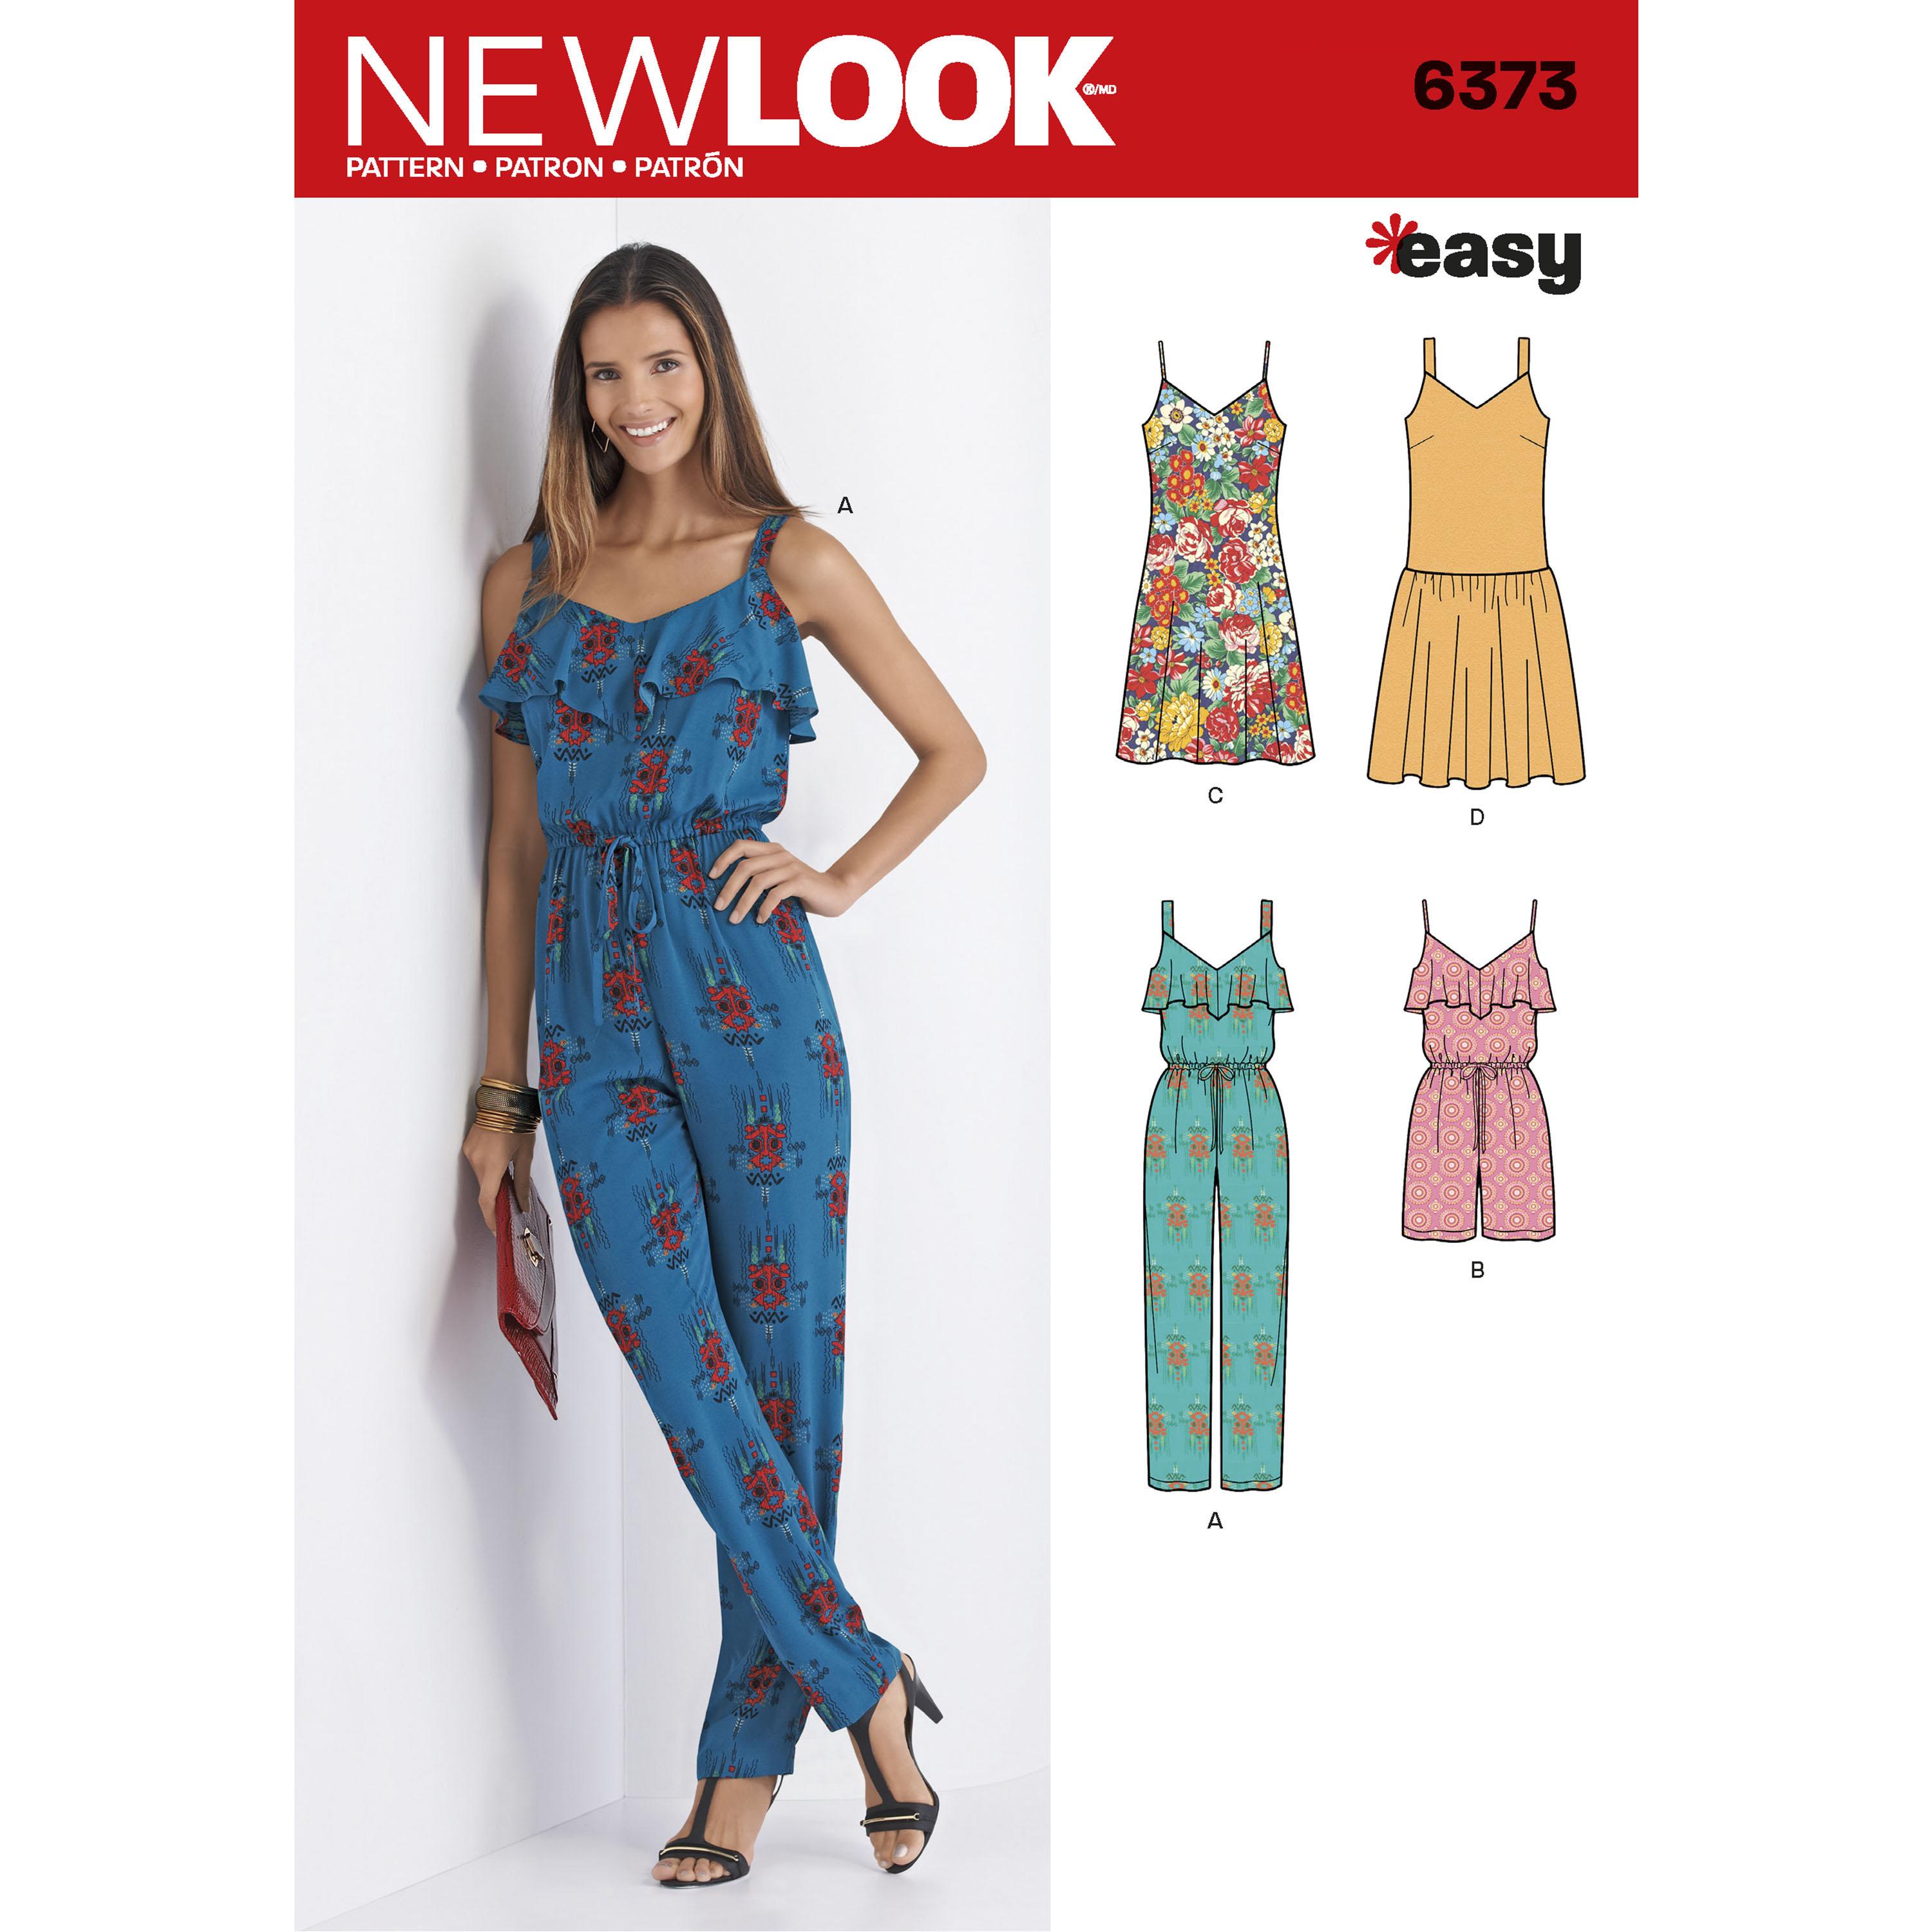 NewLook N6373 Misses' Jumpsuit or Romper and Dresses